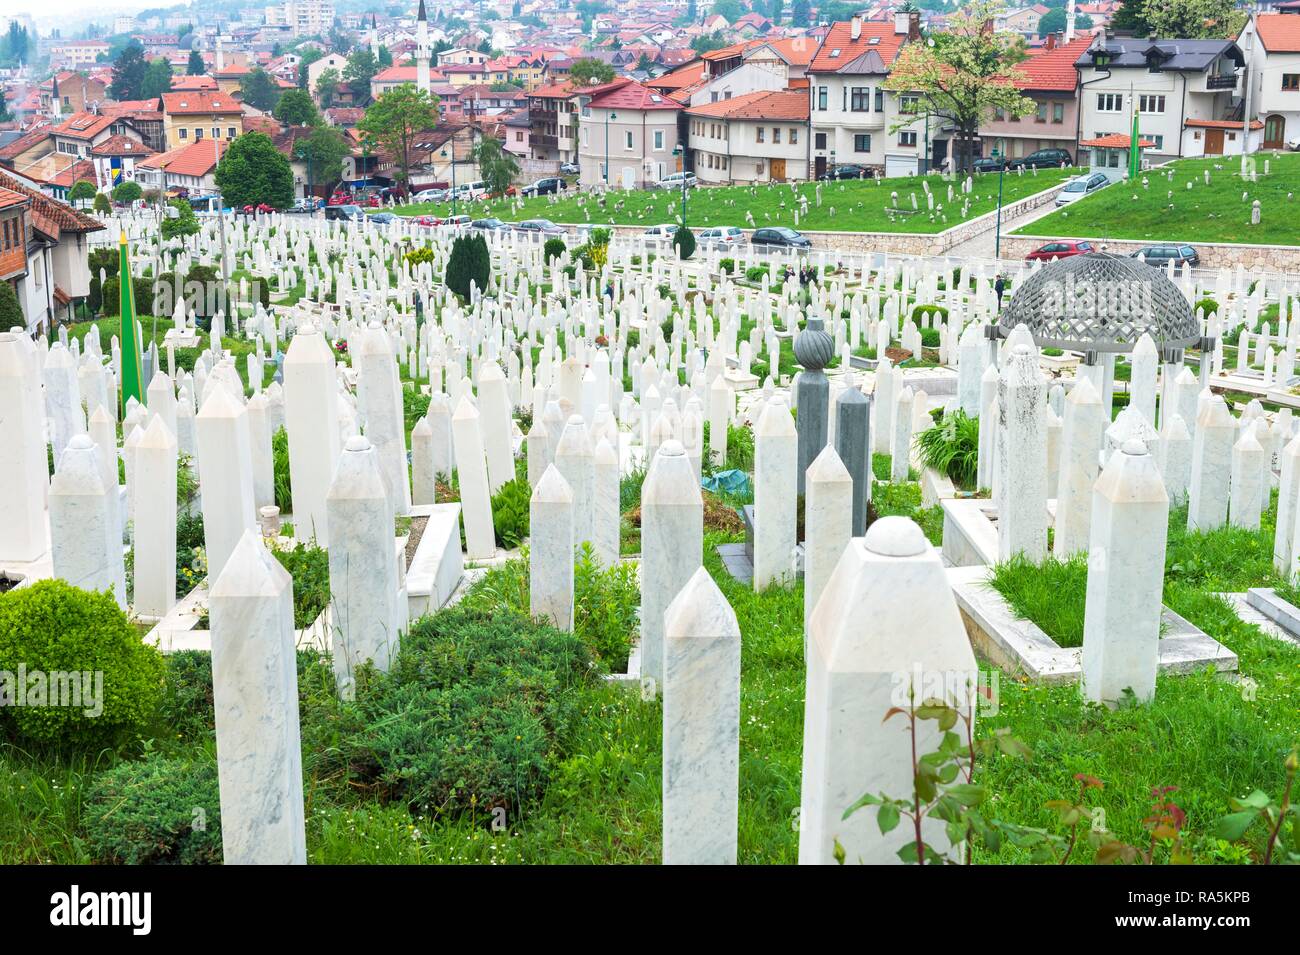 Cimetière des martyrs Matthey-doret, Sarajevo, Bosnie et Herzégovine Banque D'Images